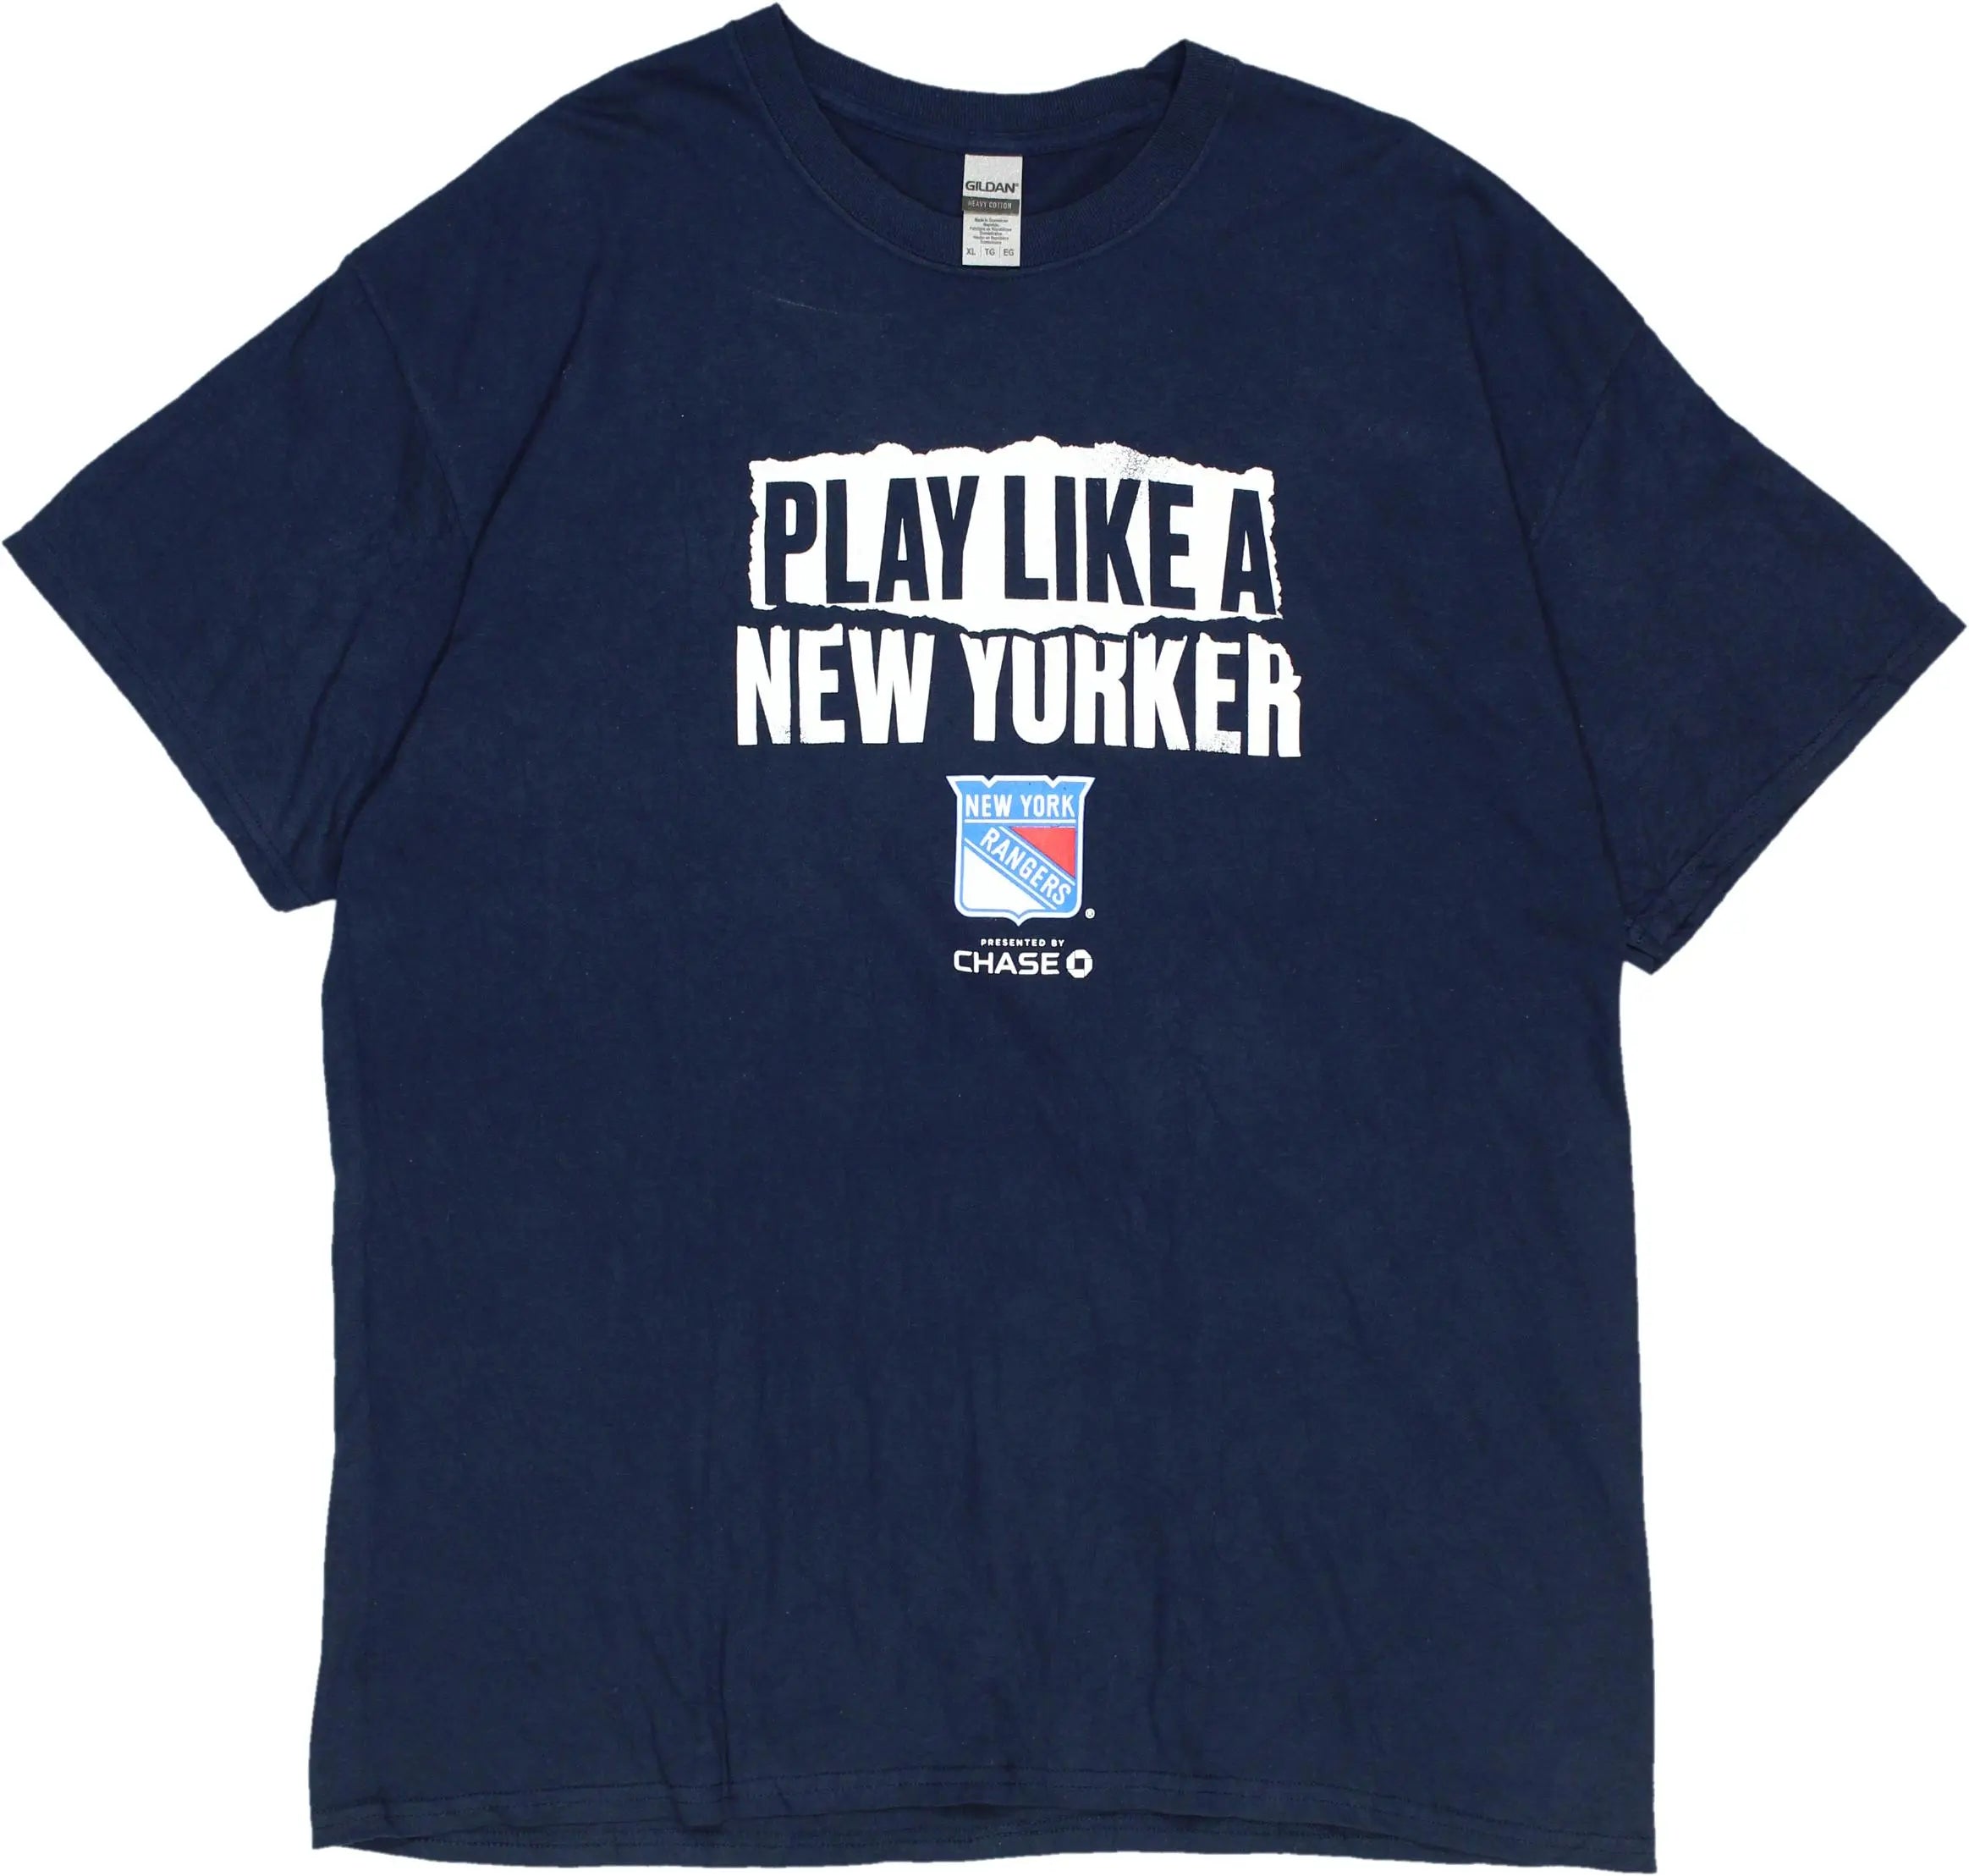 Gildan - New York Rangers T-Shirt- ThriftTale.com - Vintage and second handclothing